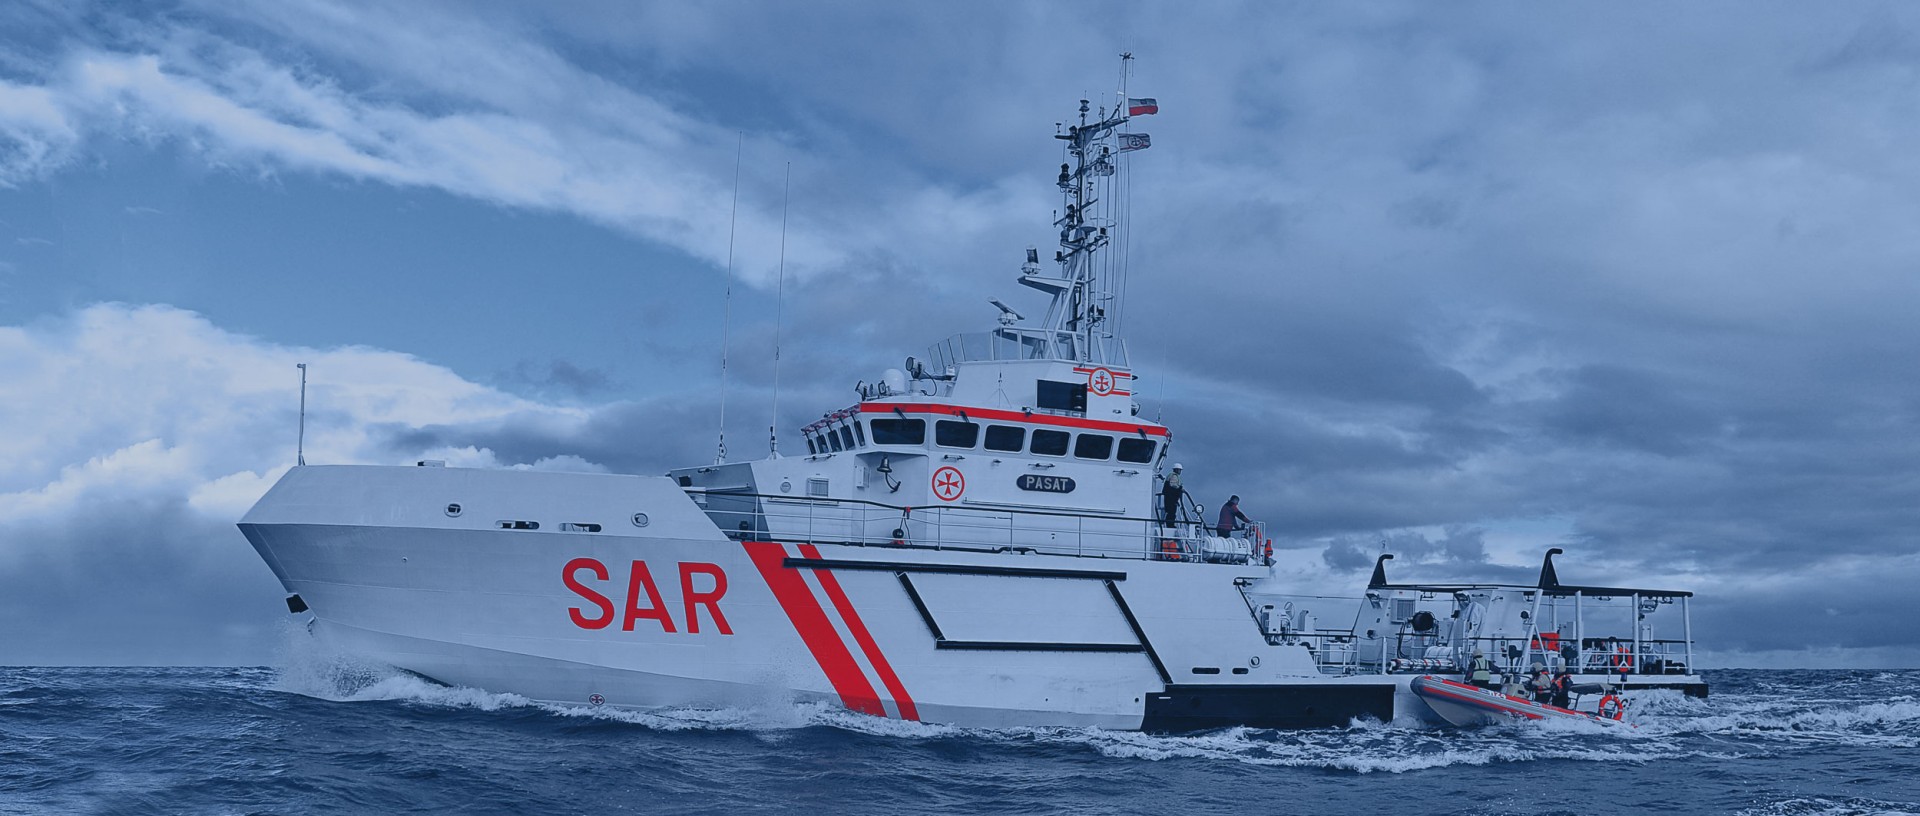 Fot. Morska Służba Poszukiwania i Ratownictwa